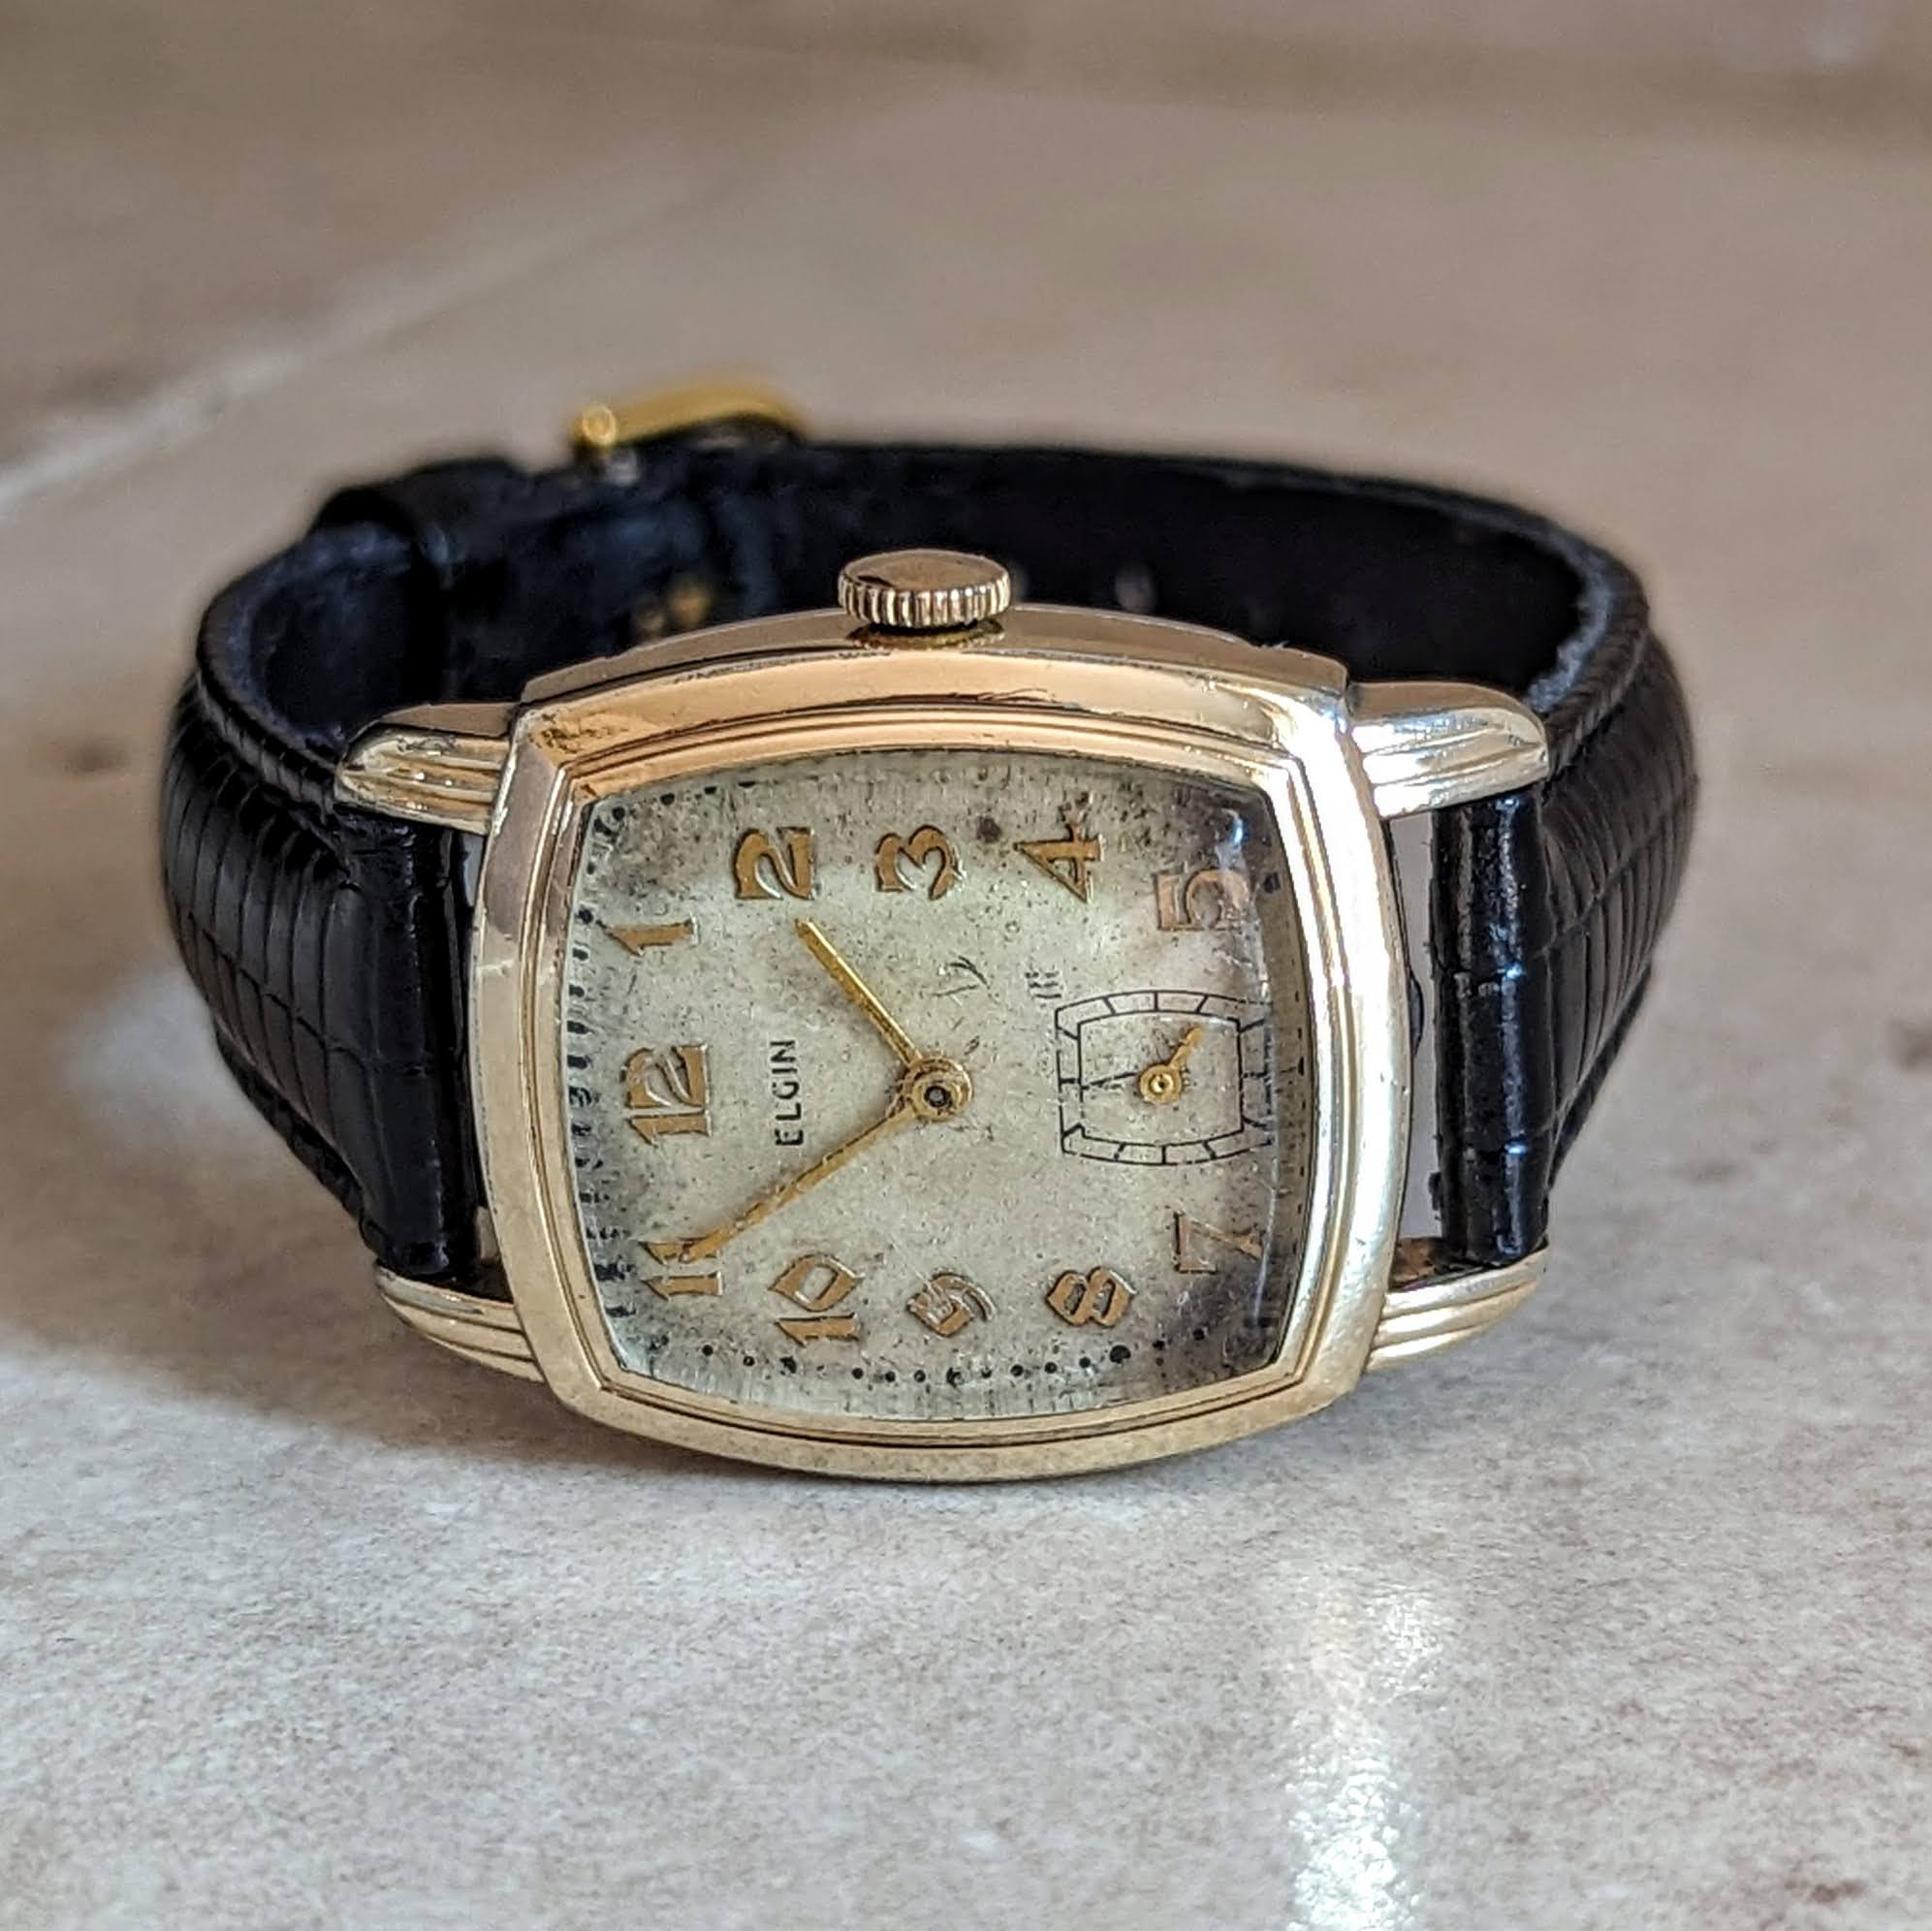 1942 ELGIN Wristwatch Grade 554 15 Jewels U.S.A Made Vintage Watch